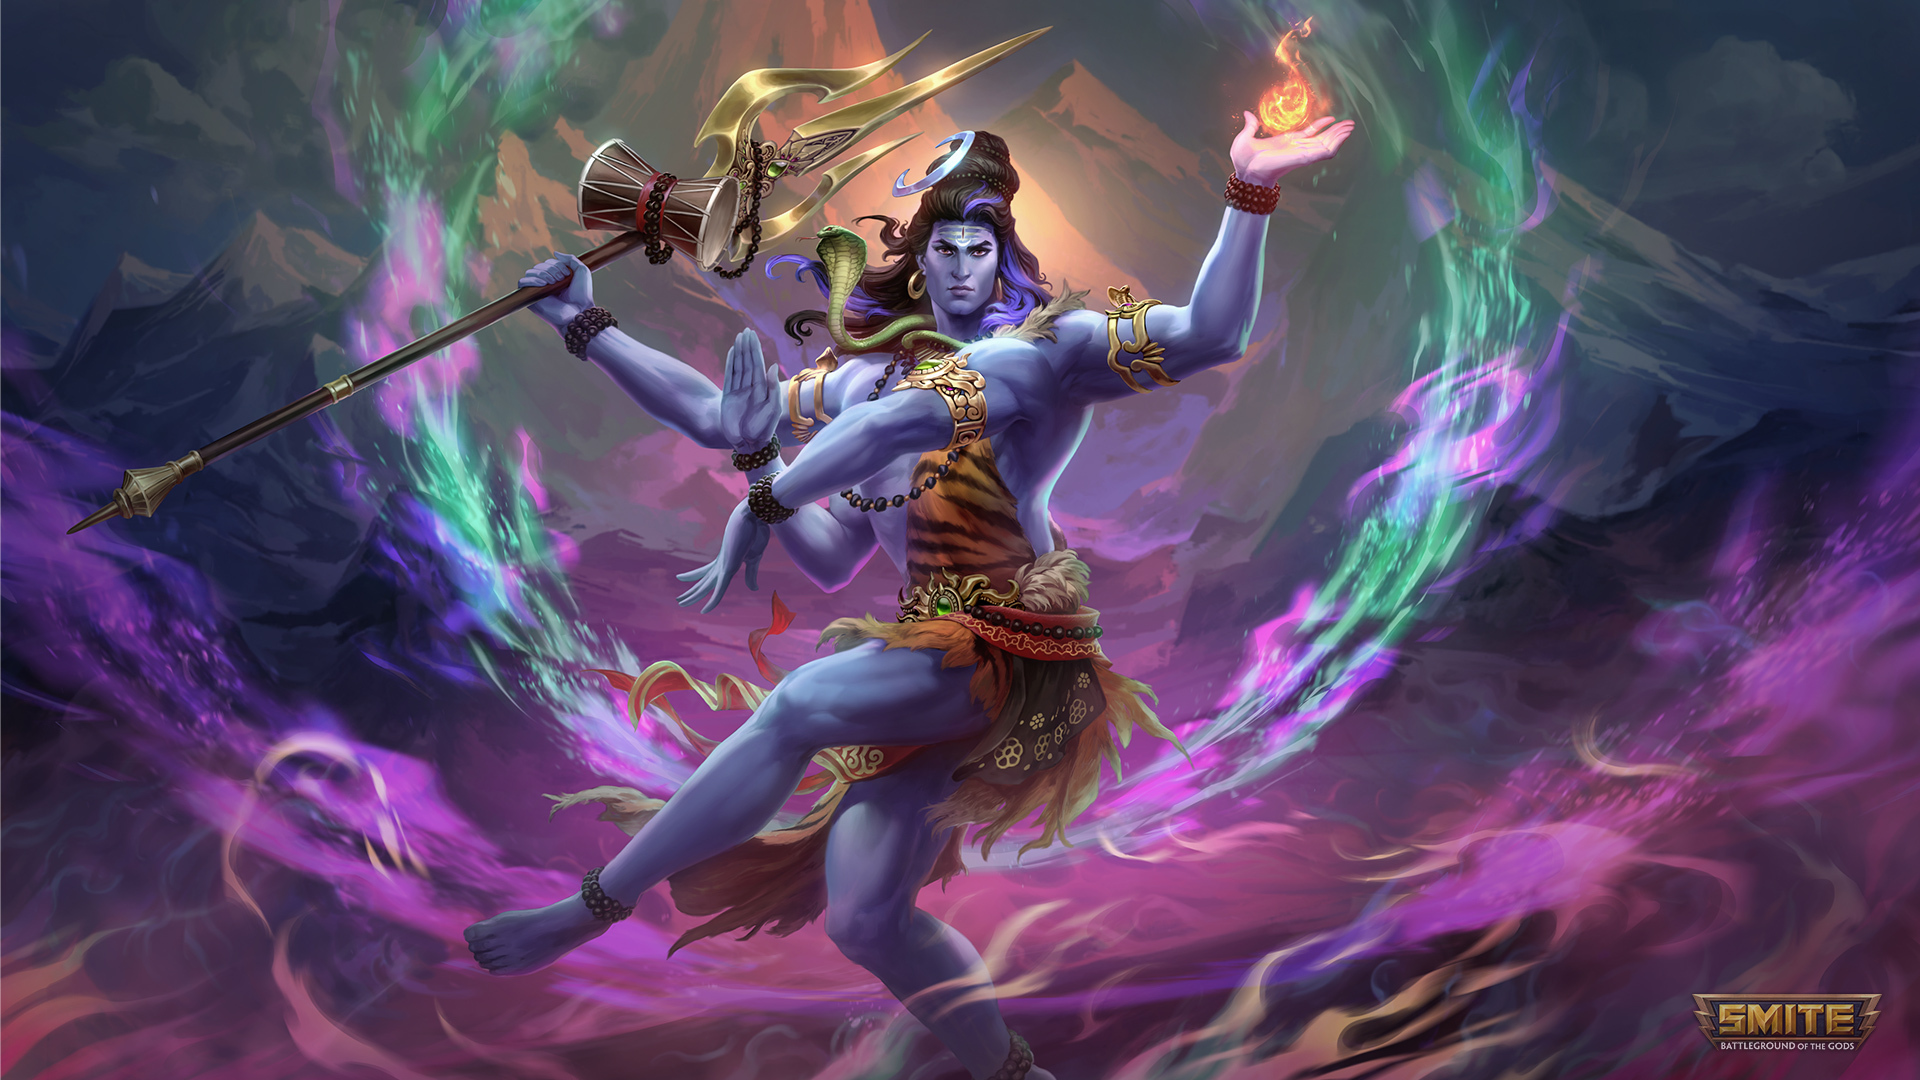 Smite's new god, Shiva, is now live - Dot Esports